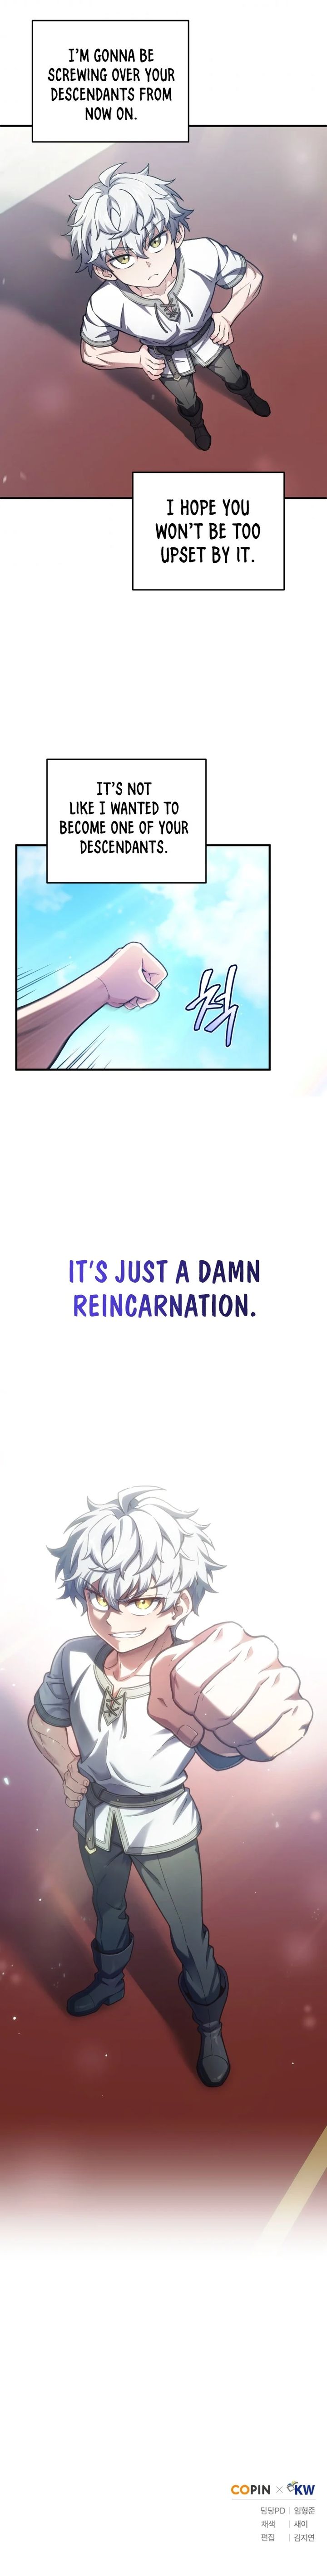 Damn Reincarnation Chapter 4 Page 11